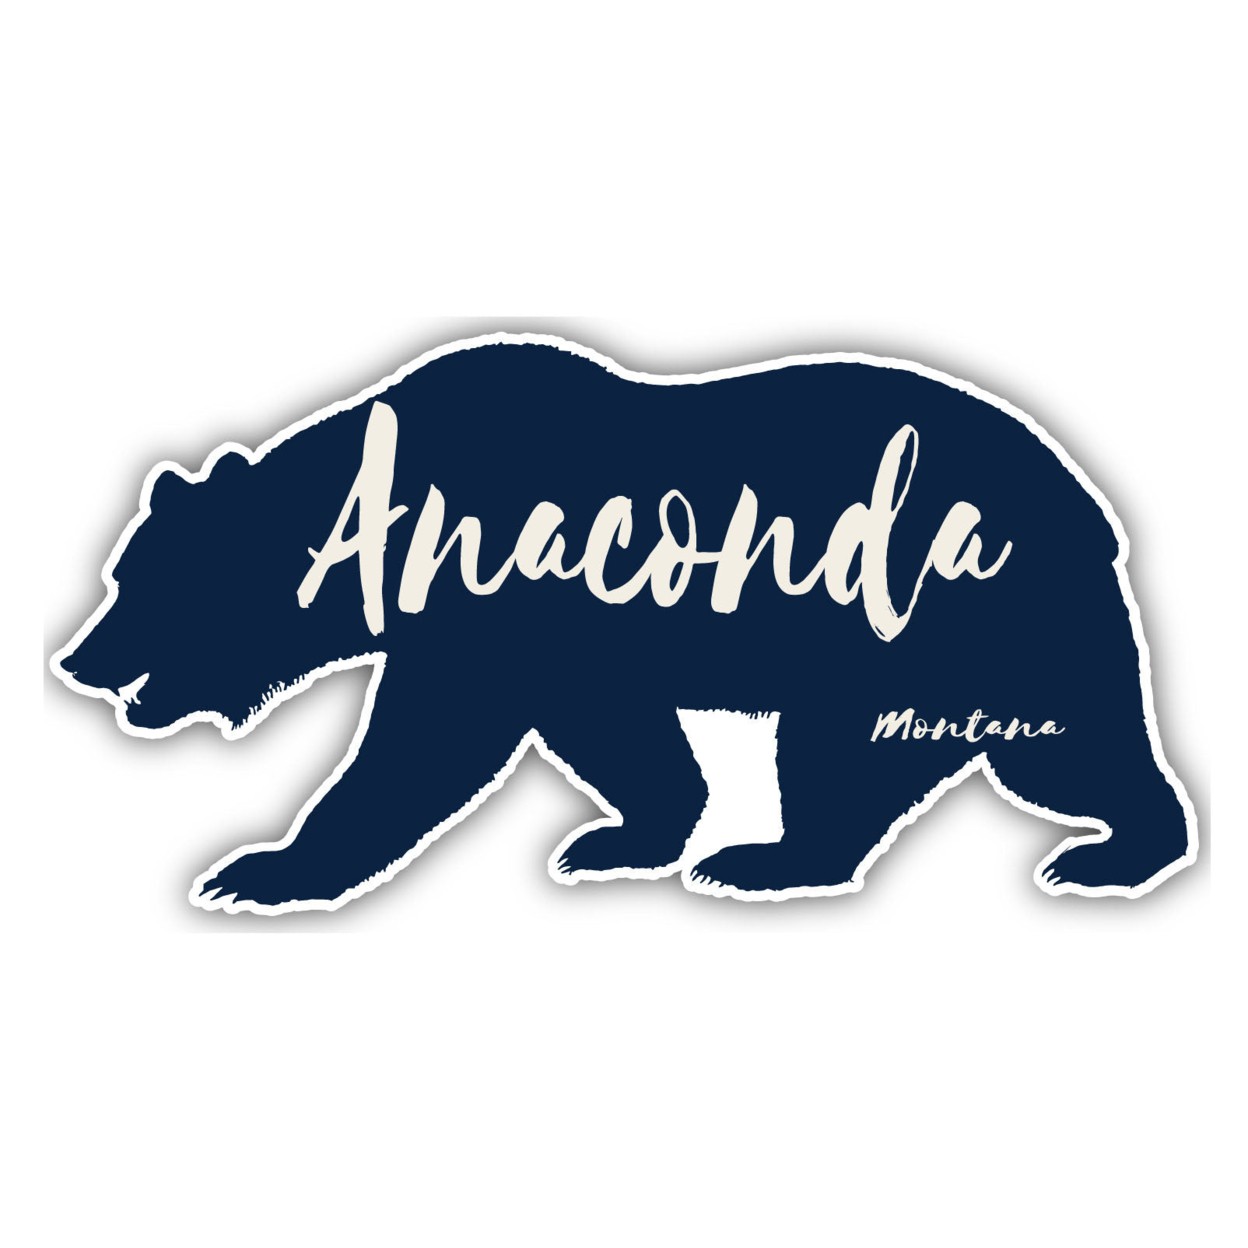 Anaconda Montana Souvenir Decorative Stickers (Choose Theme And Size) - Single Unit, 2-Inch, Bear